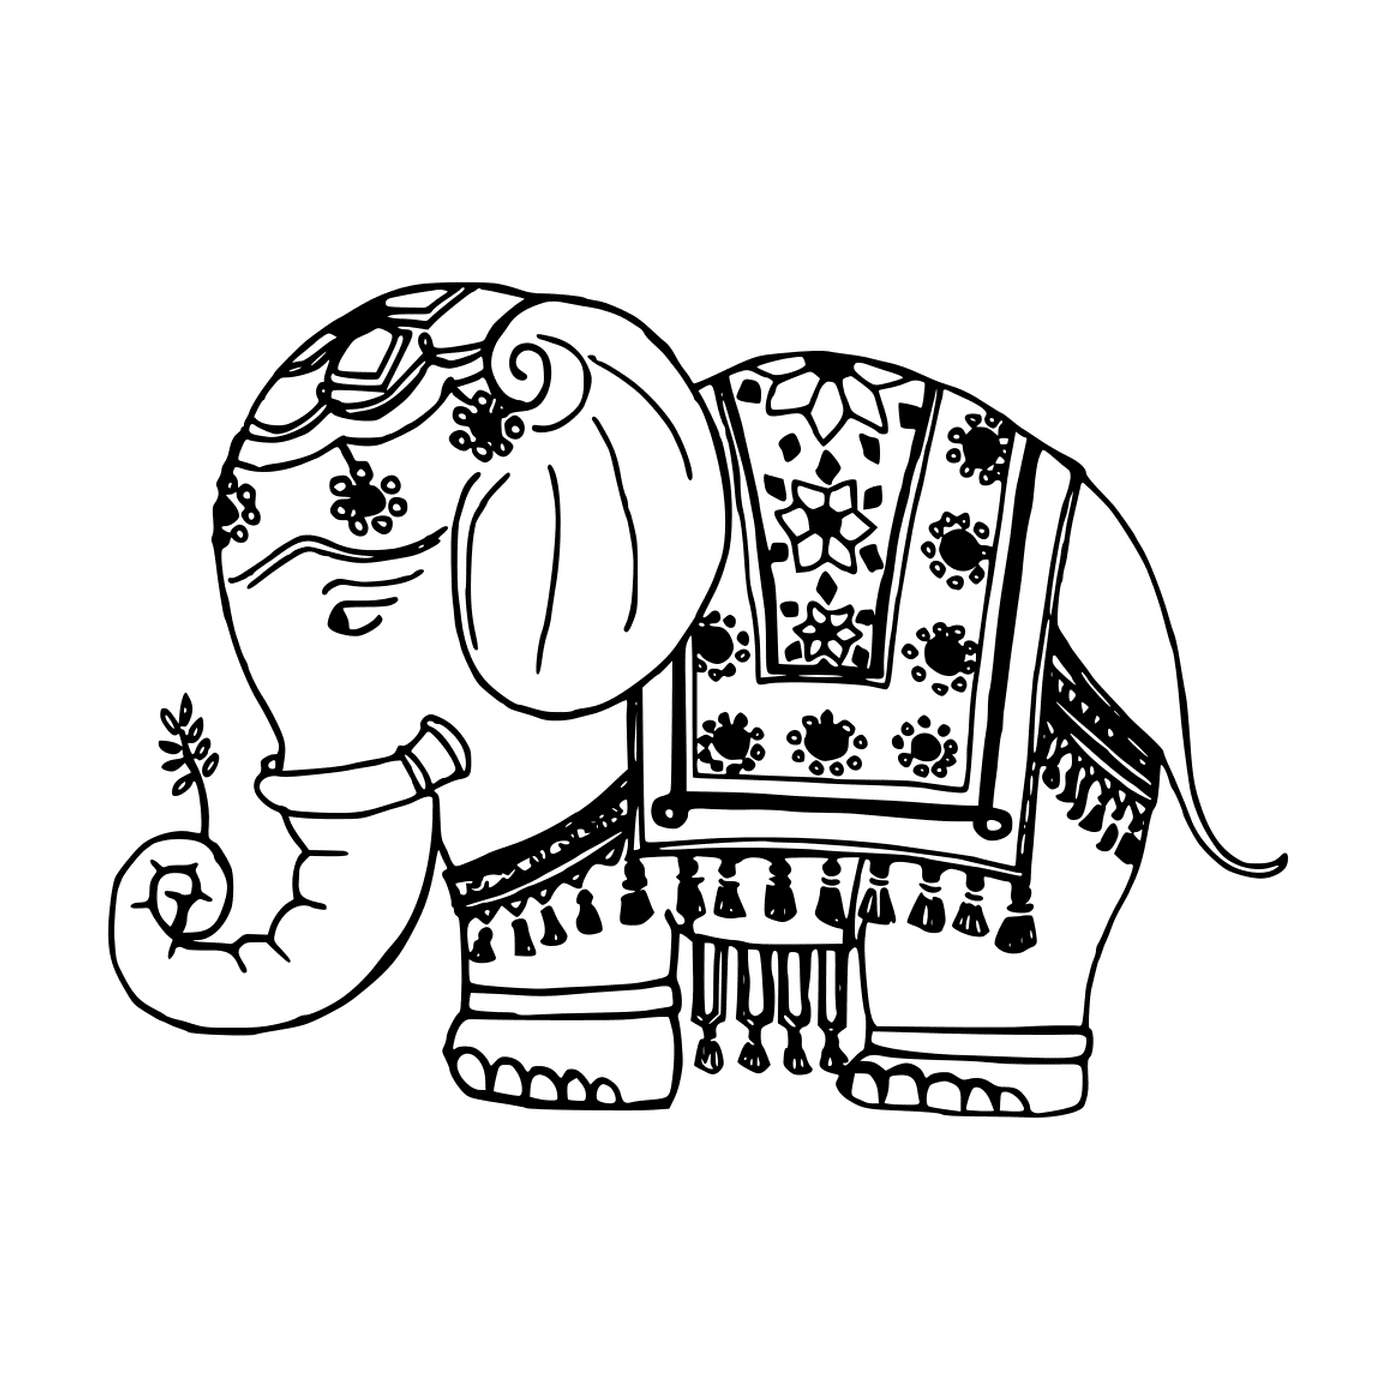  हाथी बेरा 